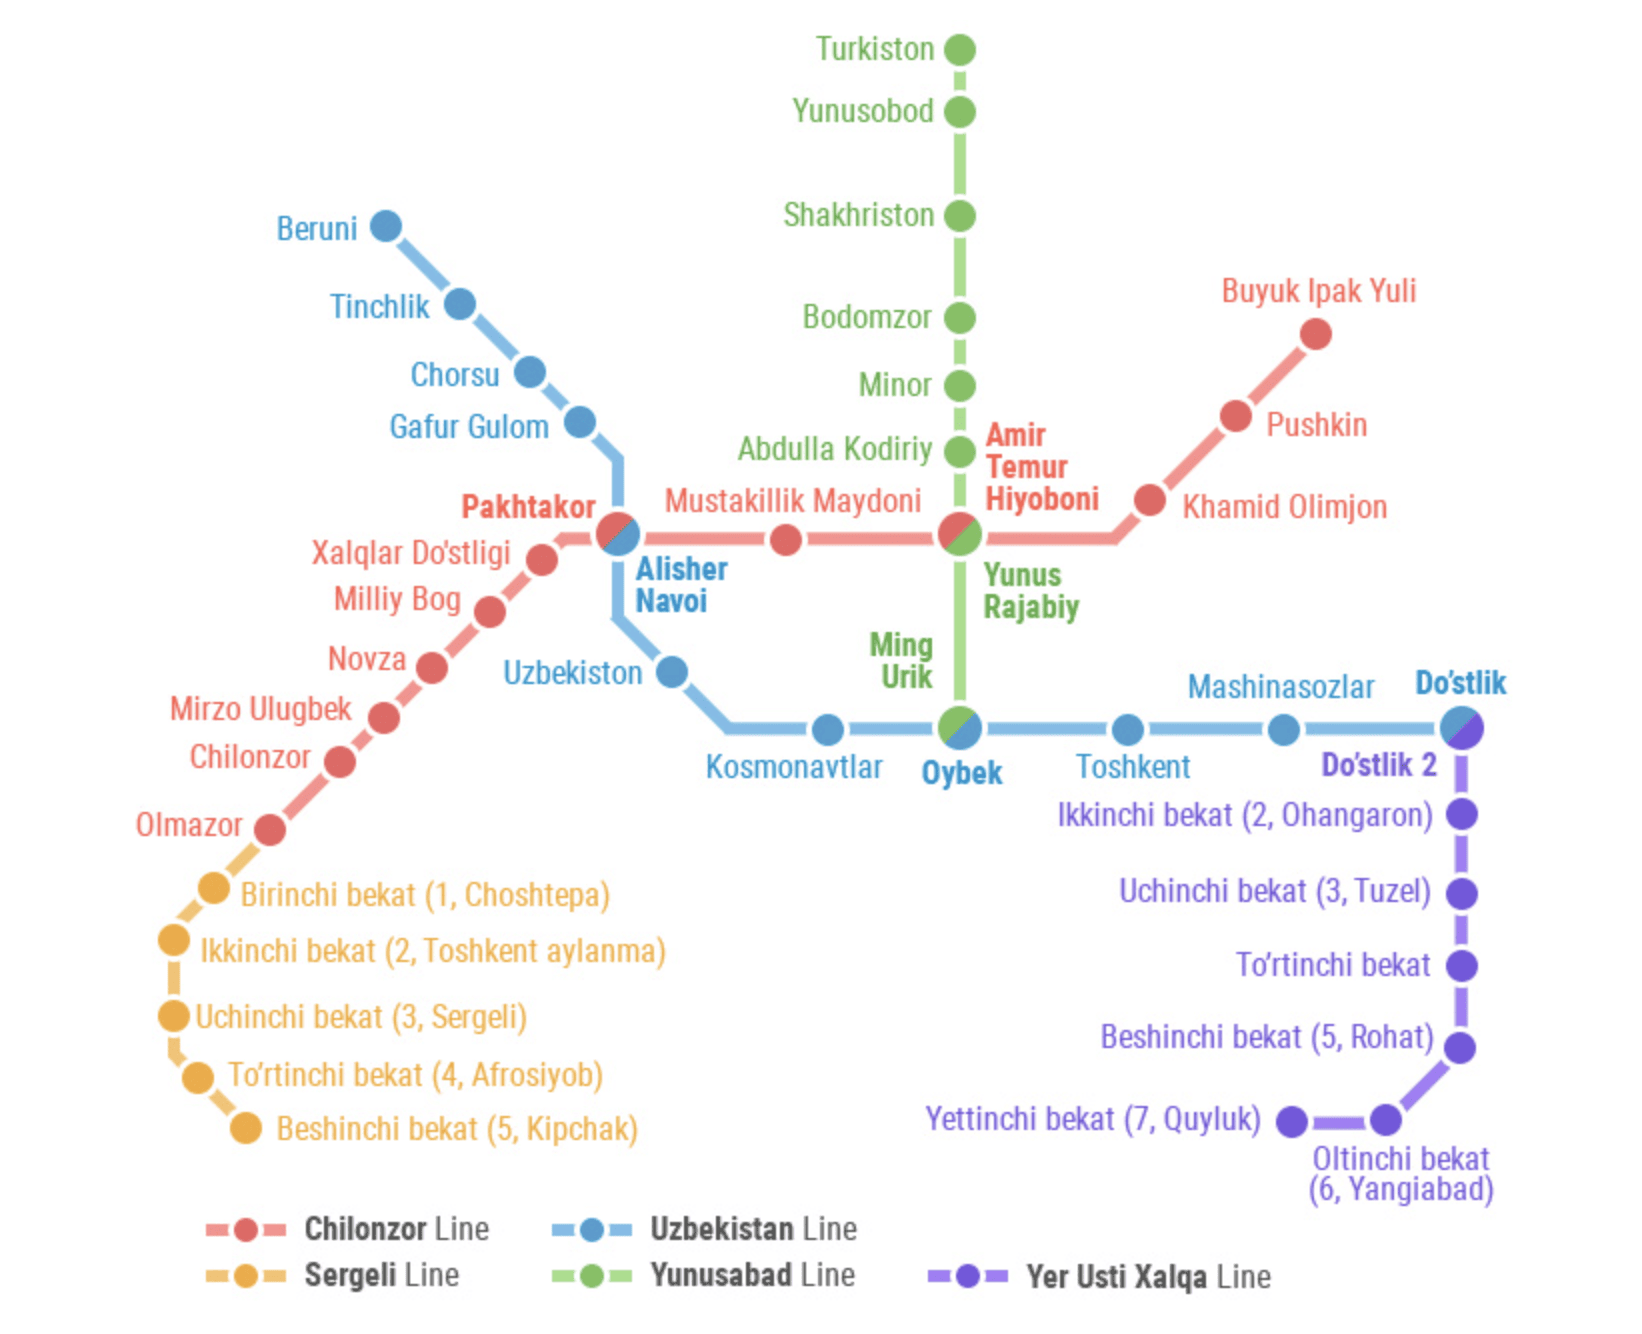 Tashkent underground Metro subway map, uzbekistan